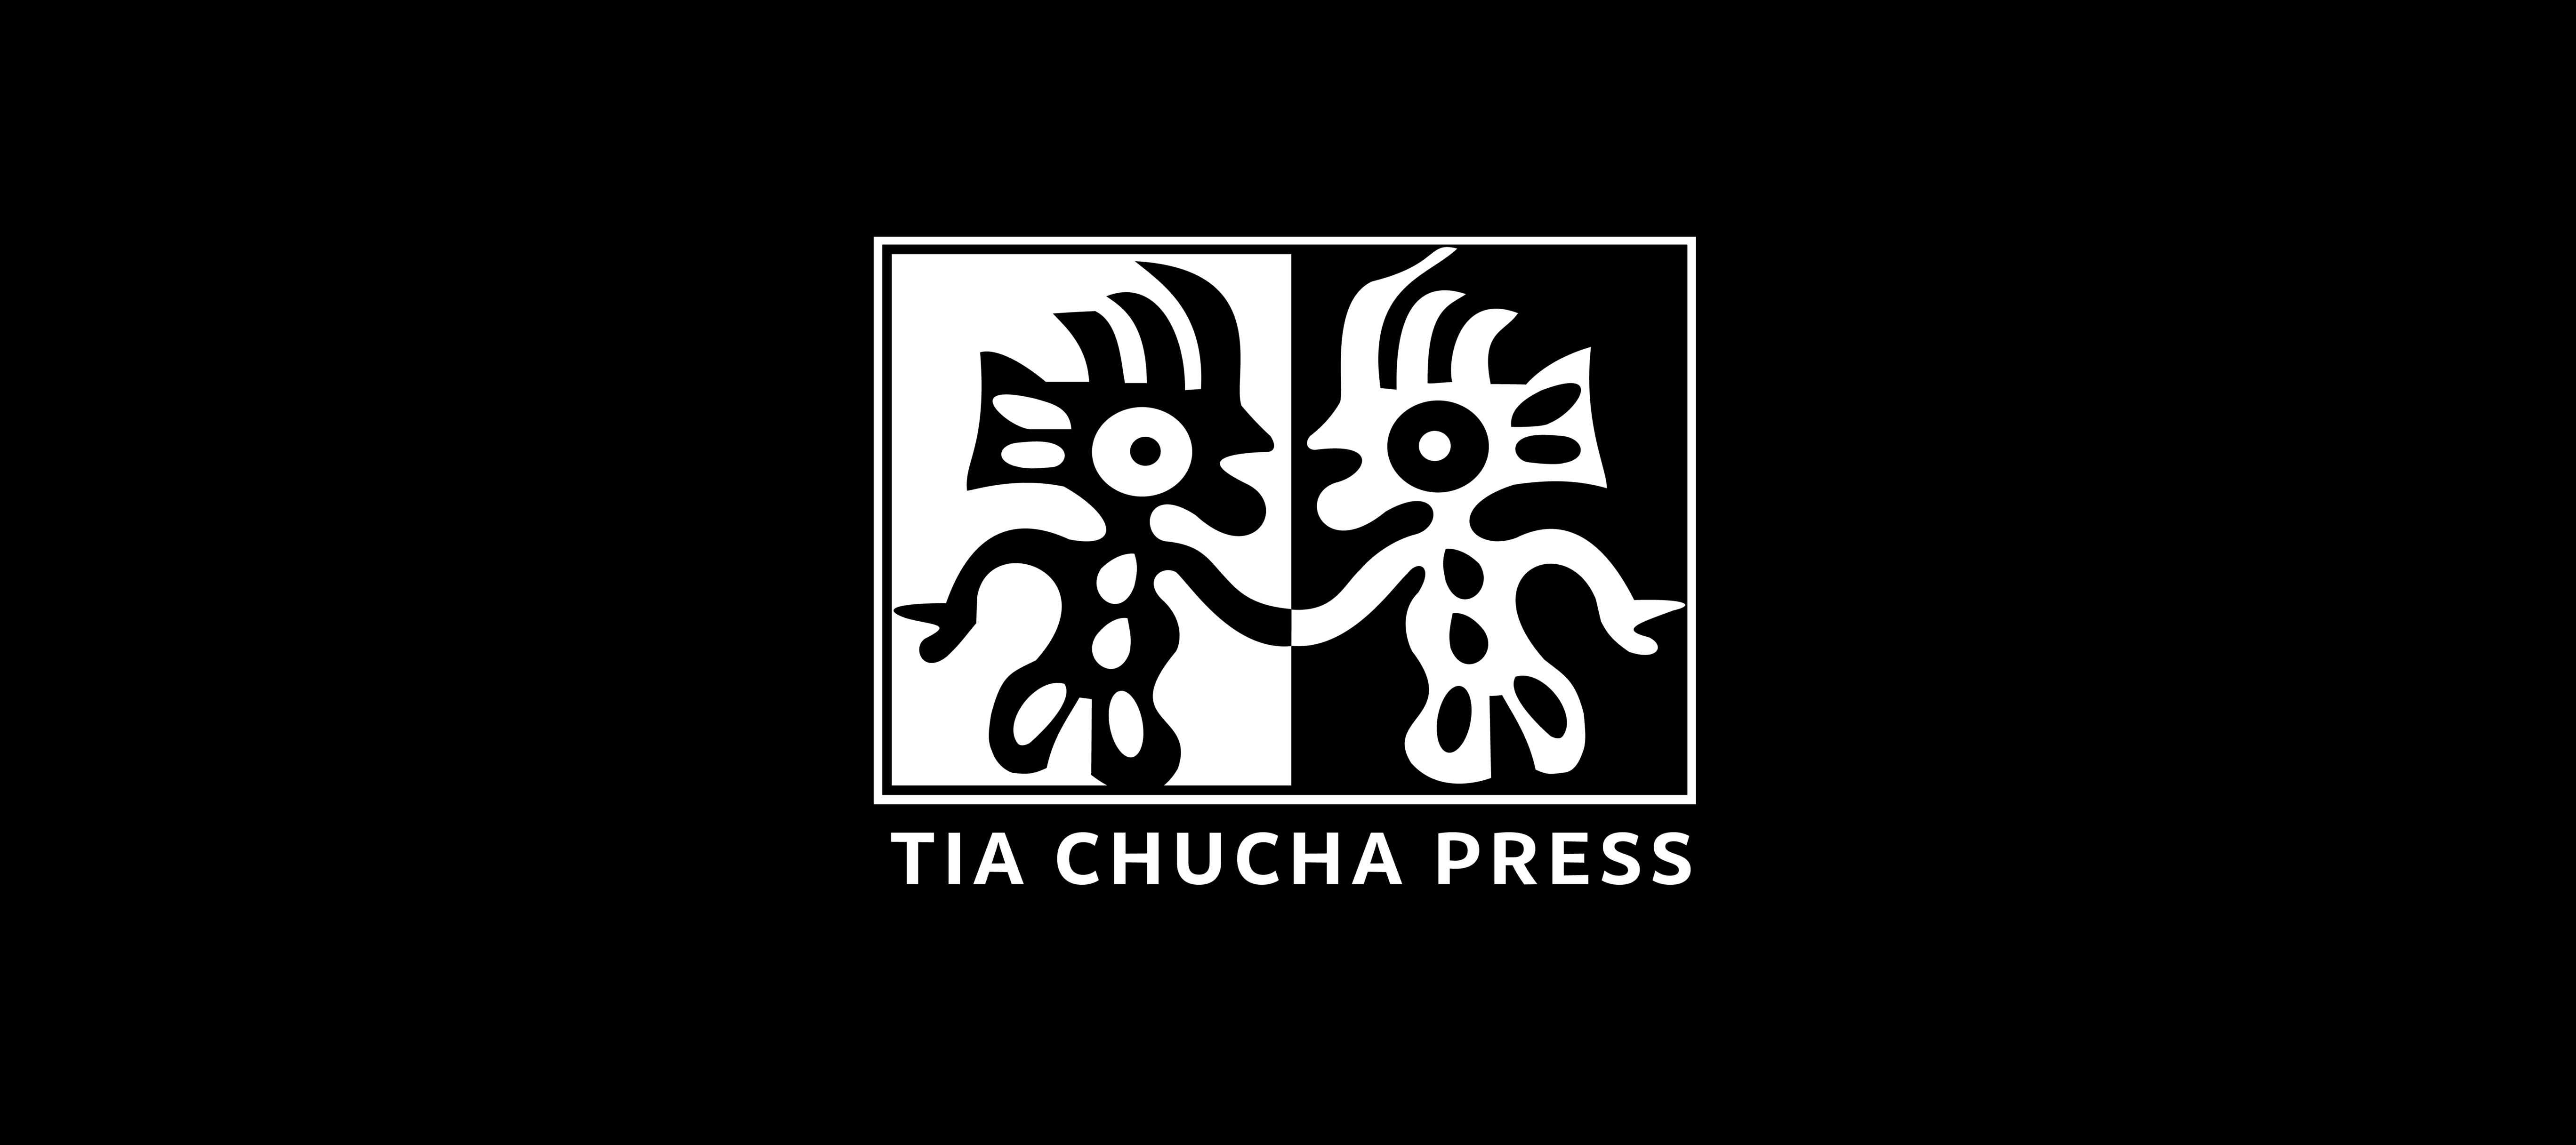 Tia Chucha Press